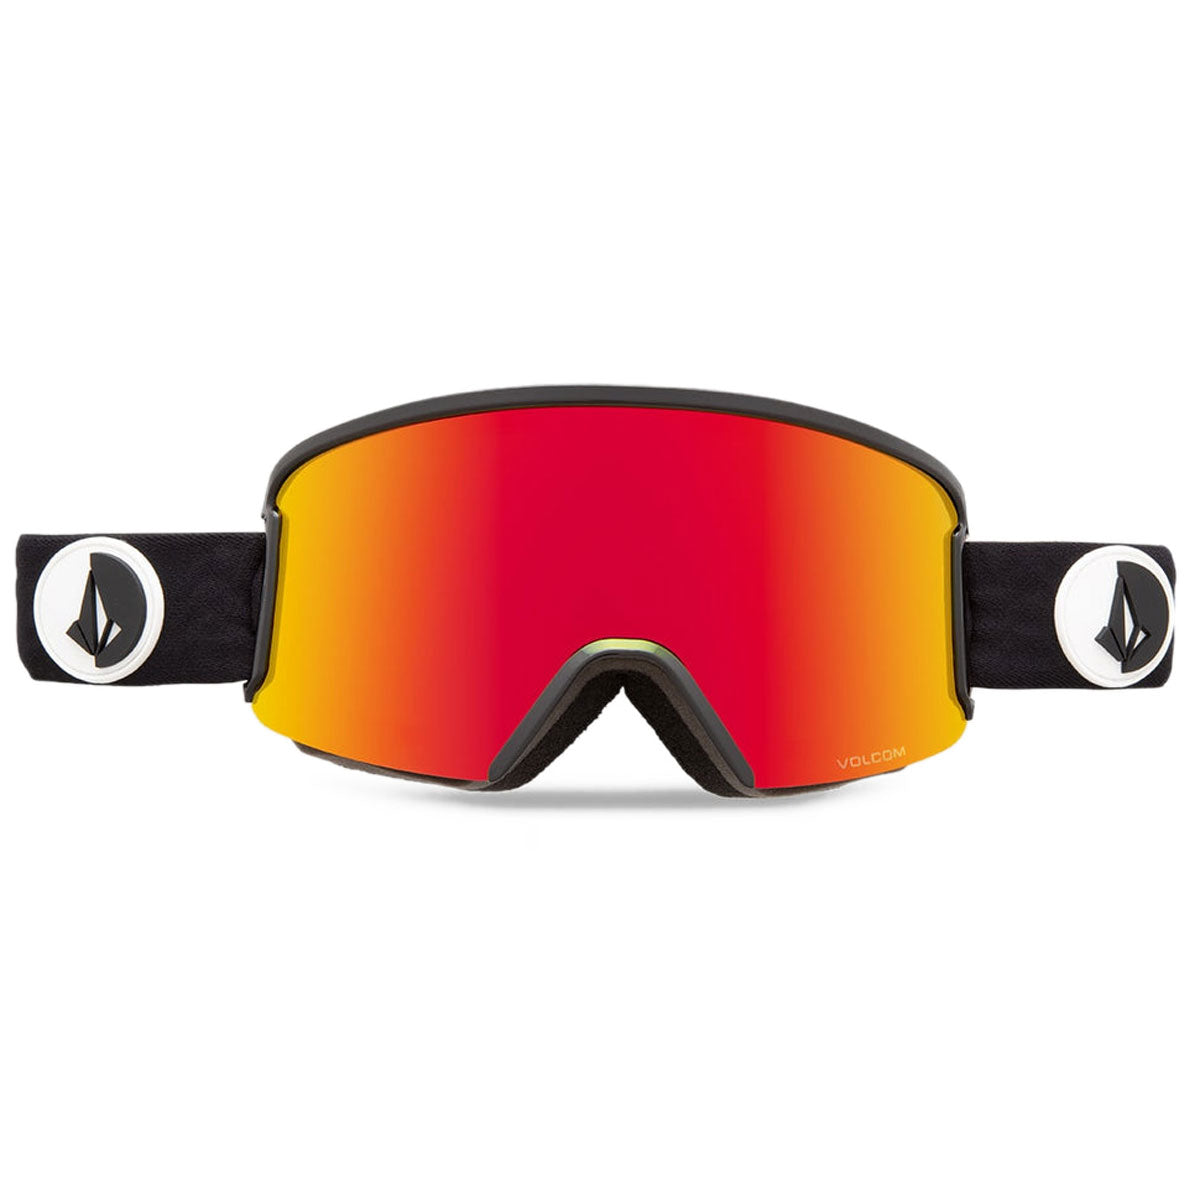 Volcom Garden Snowboard Goggles - Gloss Black/Red Chrome image 1